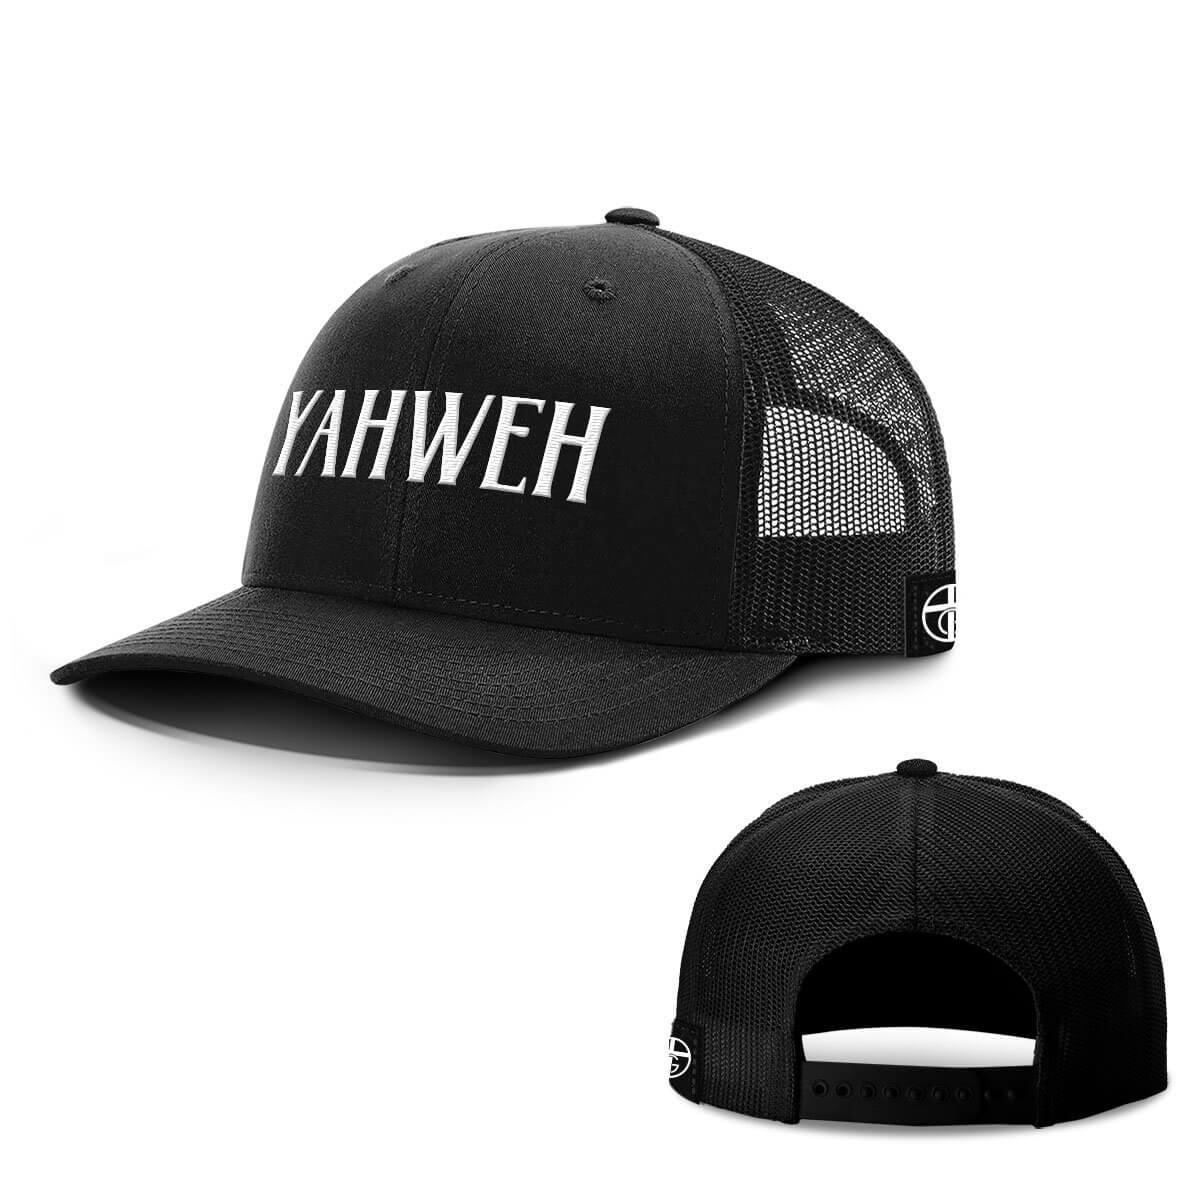 Yahweh V2 Hats - Our True God